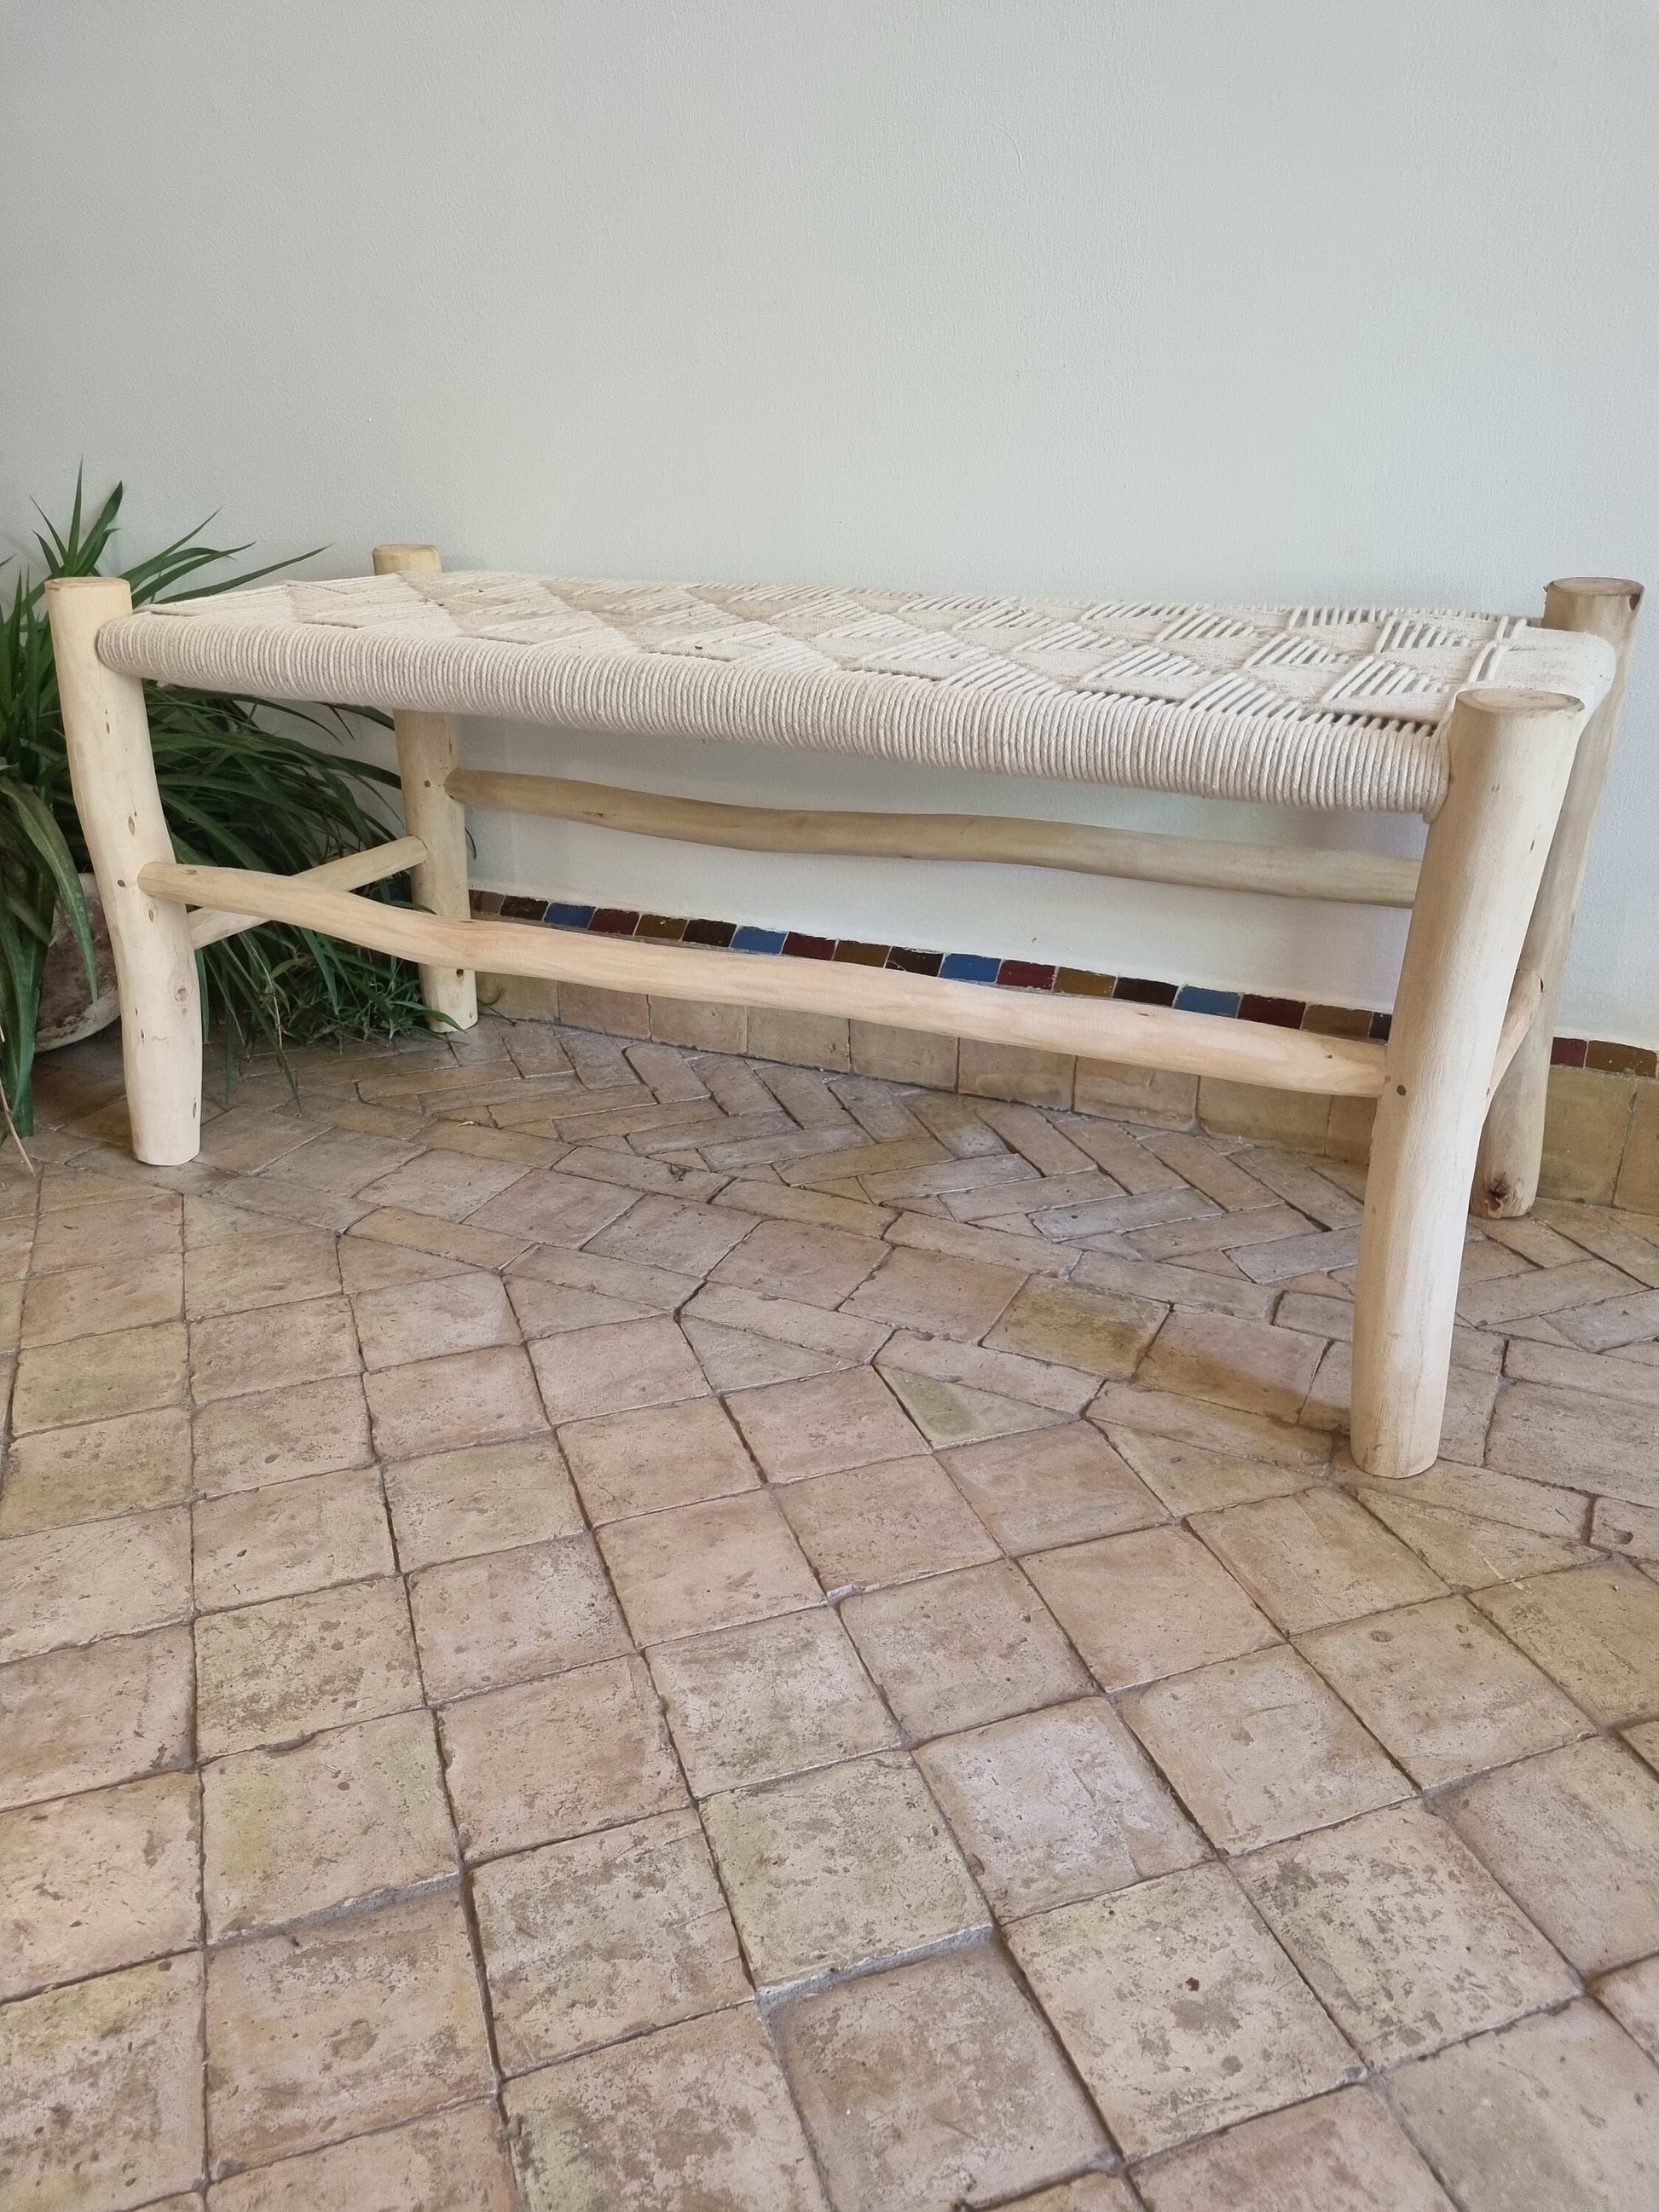 Outdoor garden bench with rope weaving	